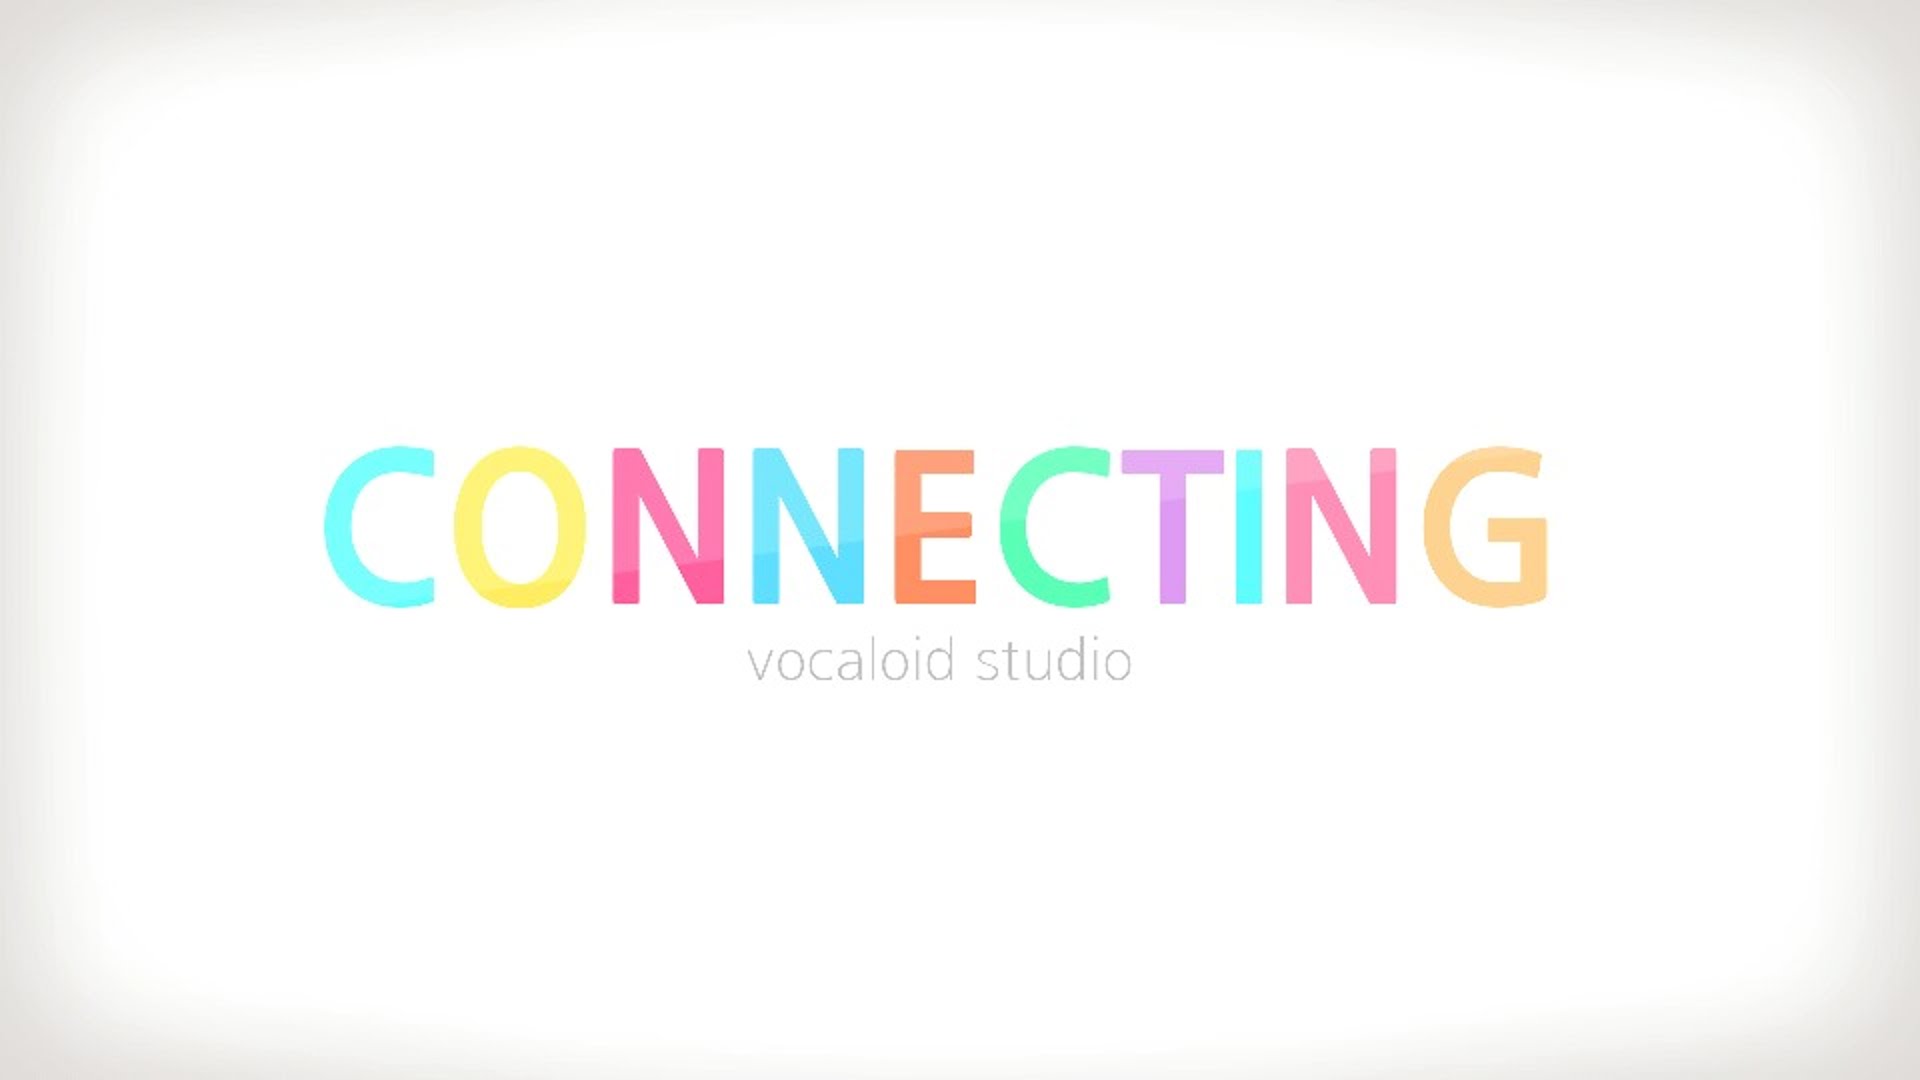 Connecting Vocaloid studio.jpg